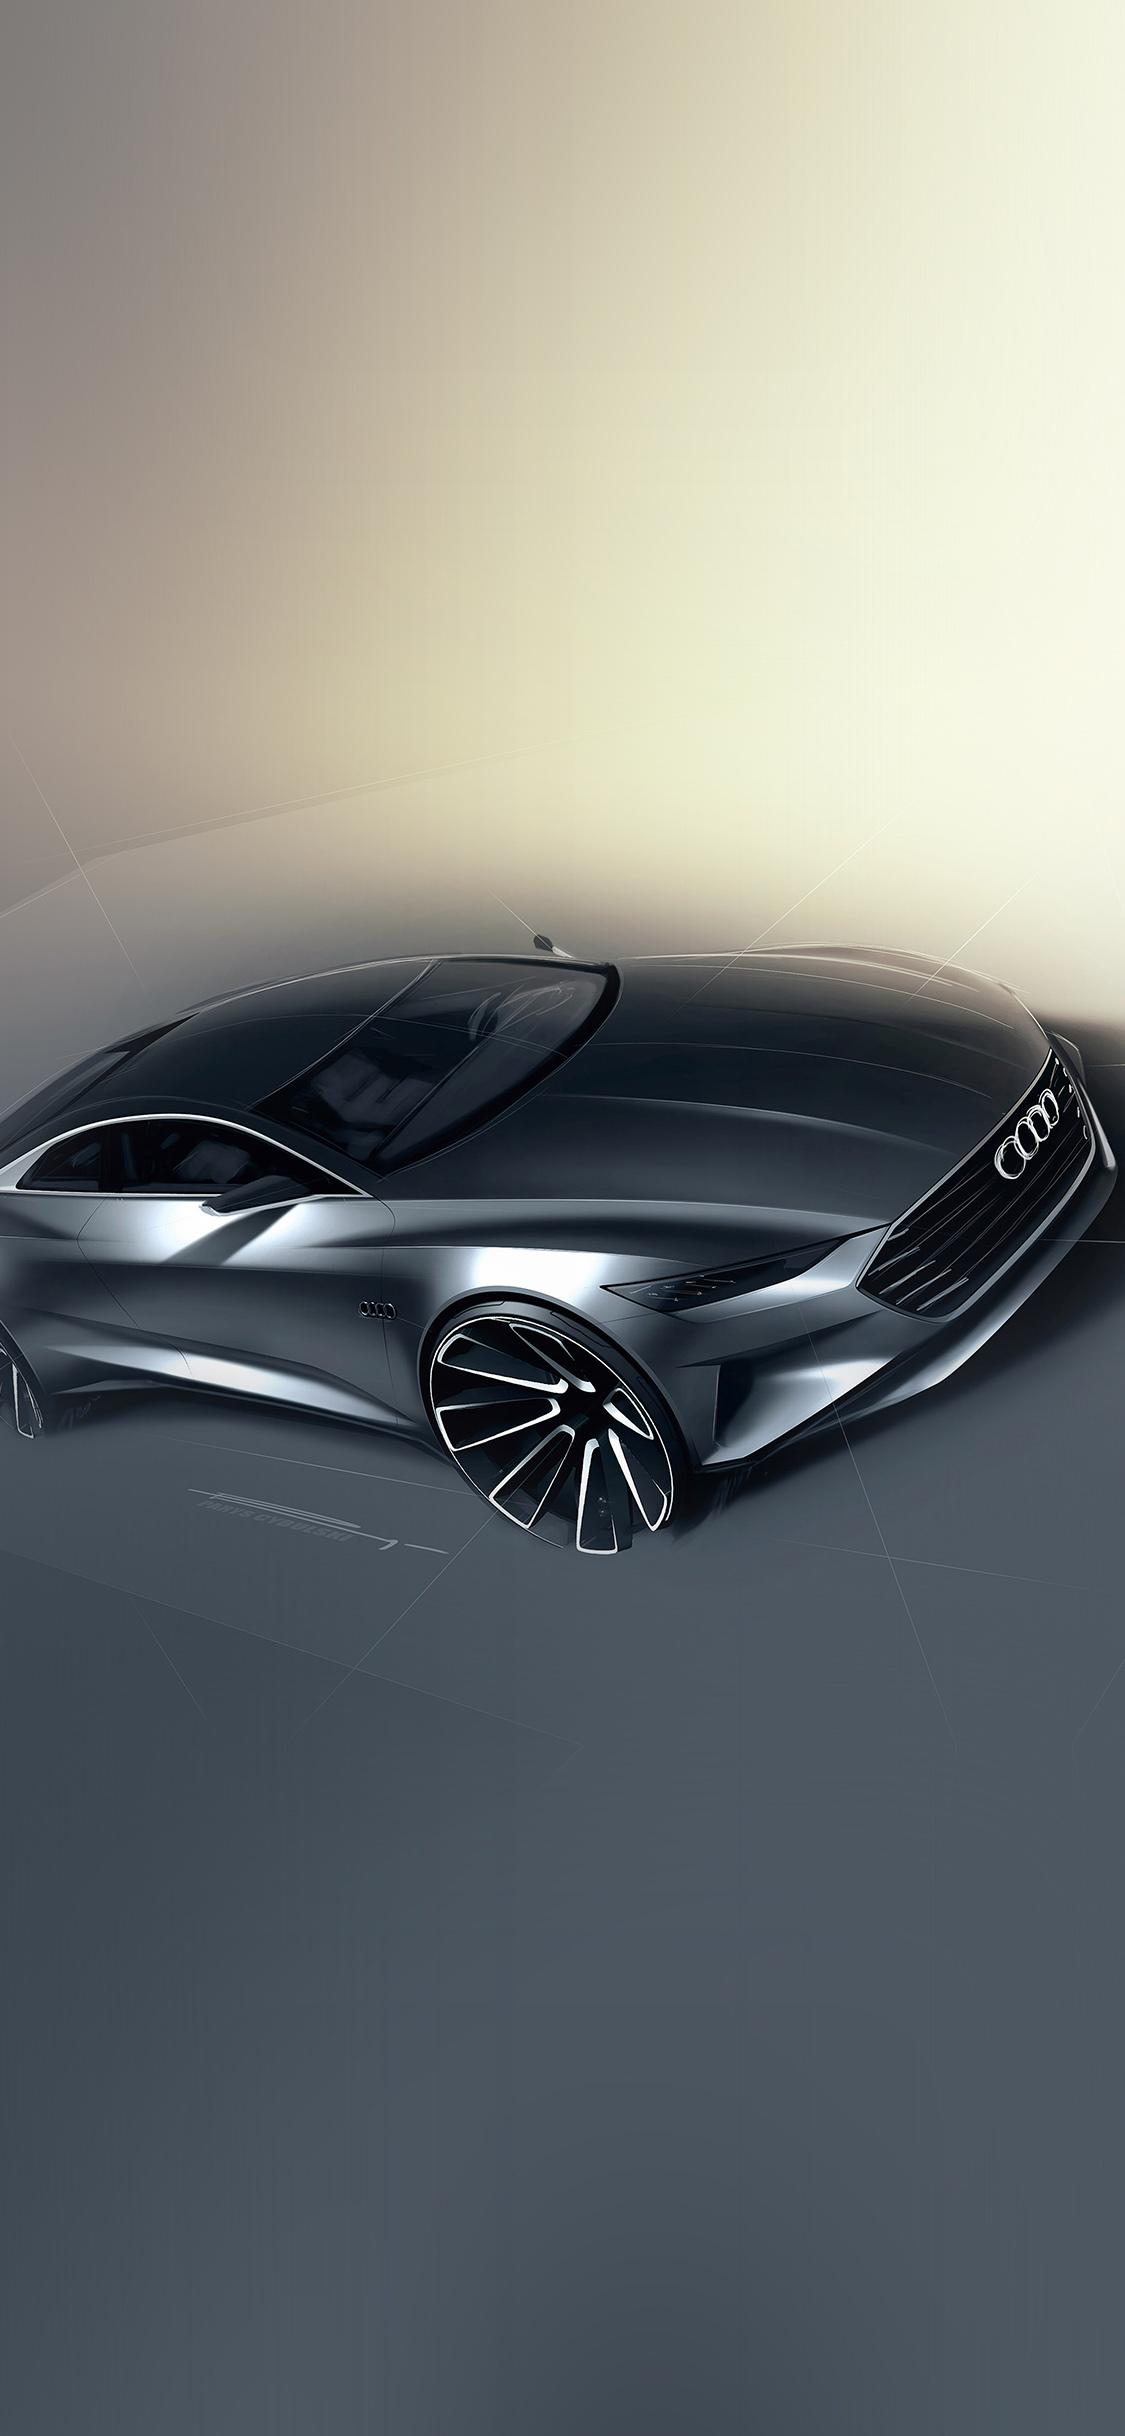 Audi Concept Car Illustration Art Wallpaper